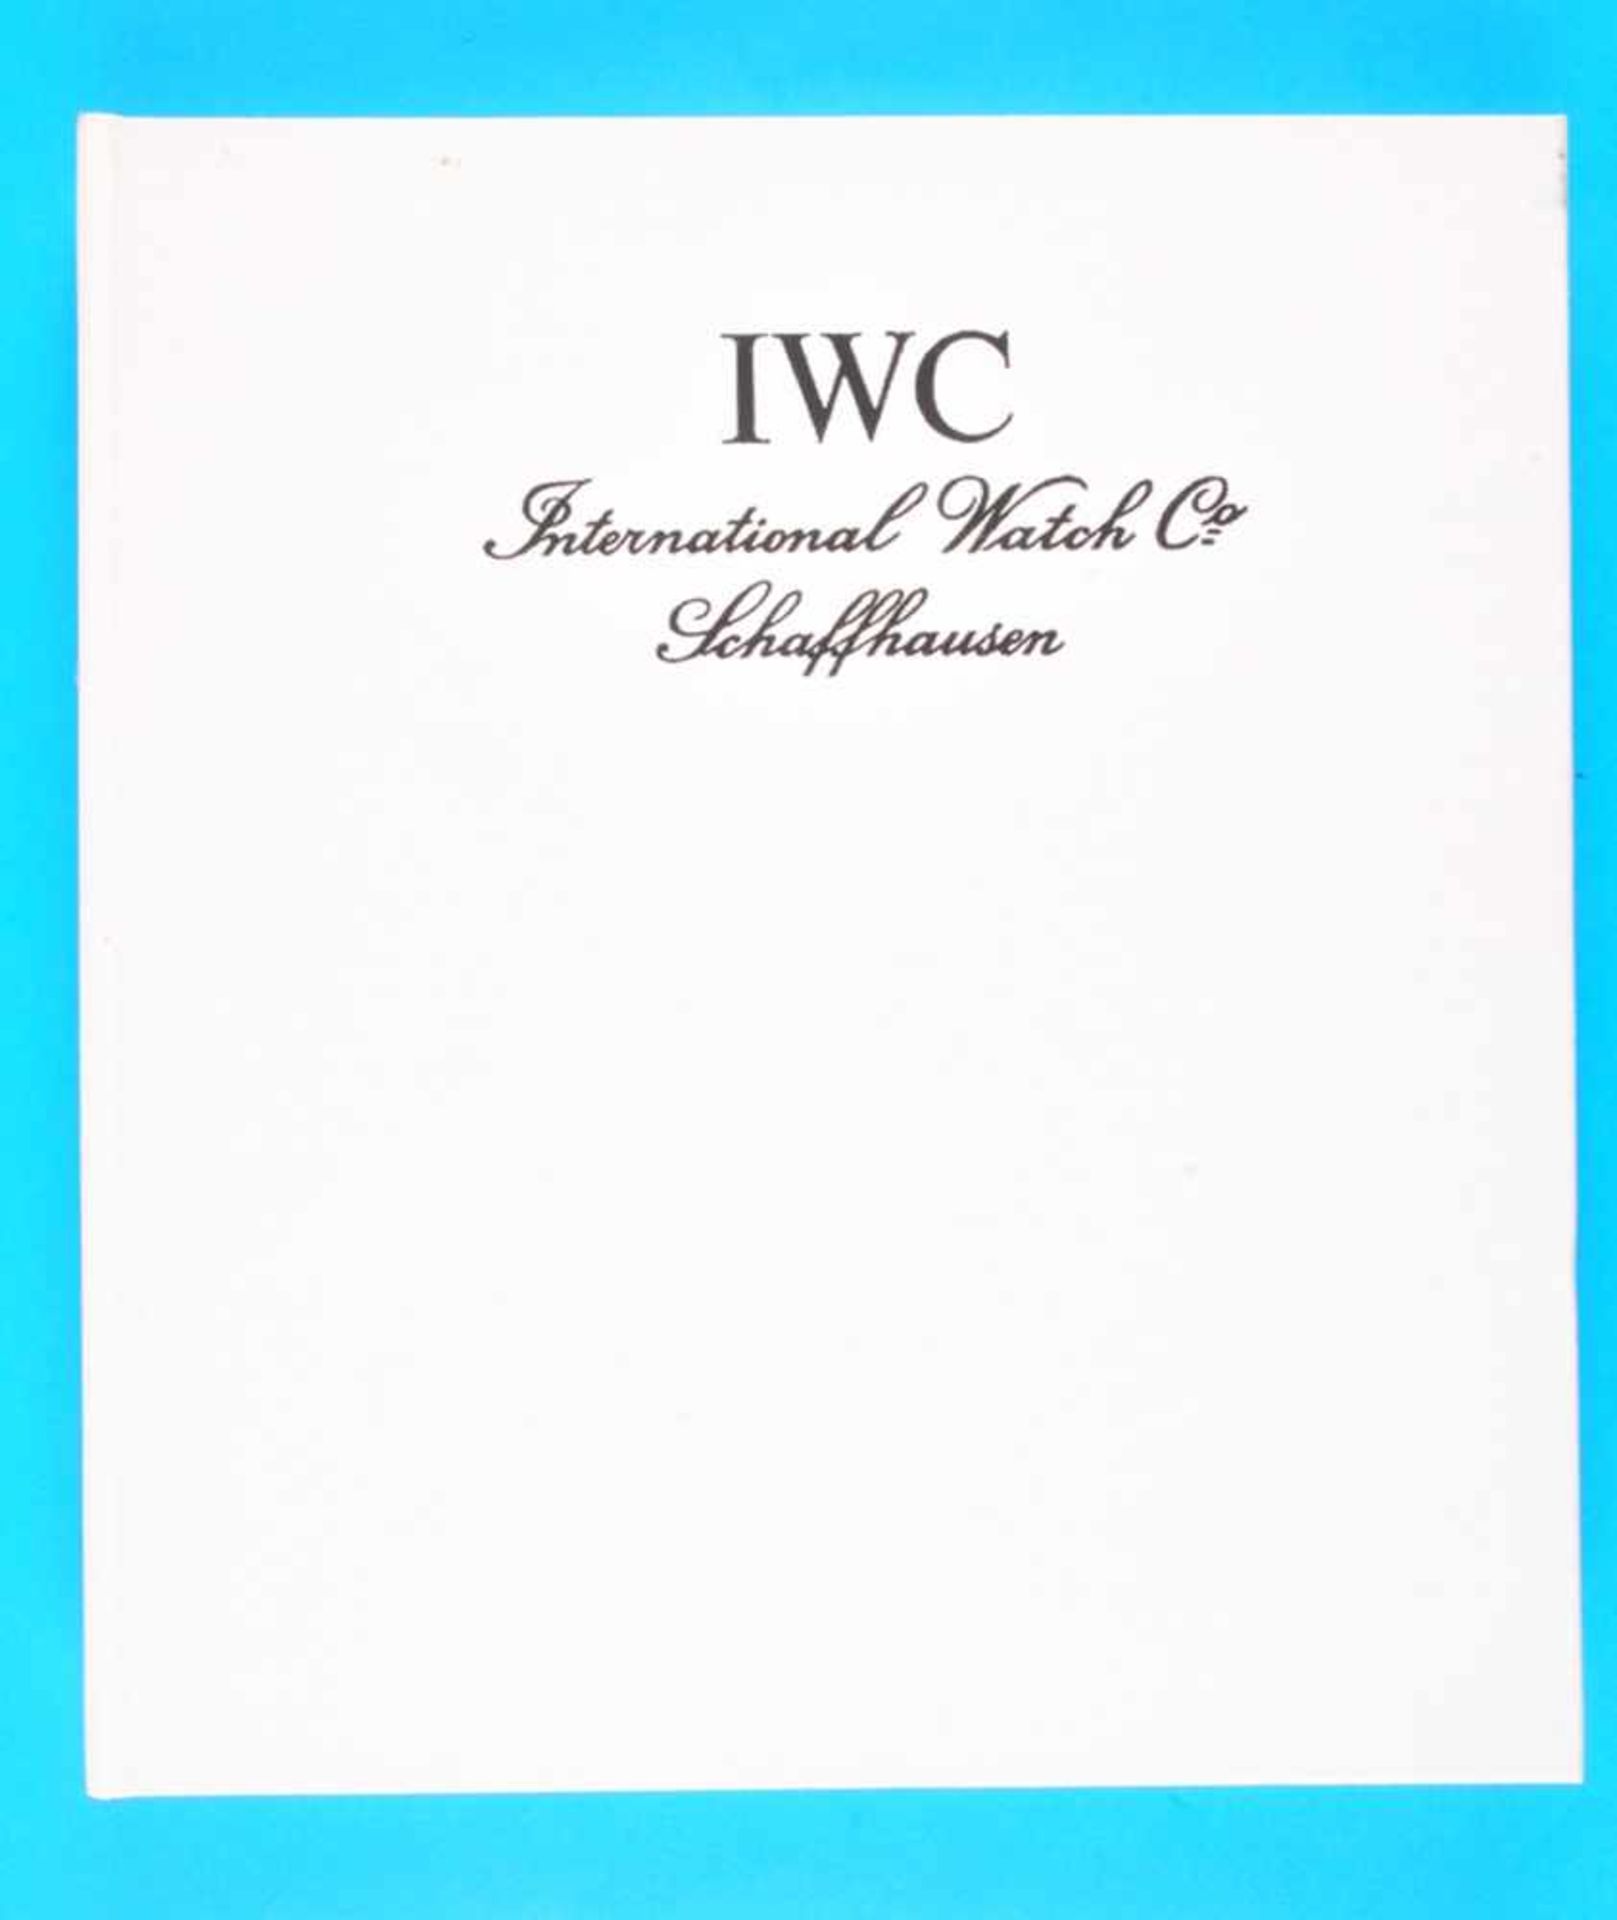 Hans-F. Tölke, Jürgen King, IWC, International Watch Co. SchafffhausenHans-F. Tölke, Jürgen King,